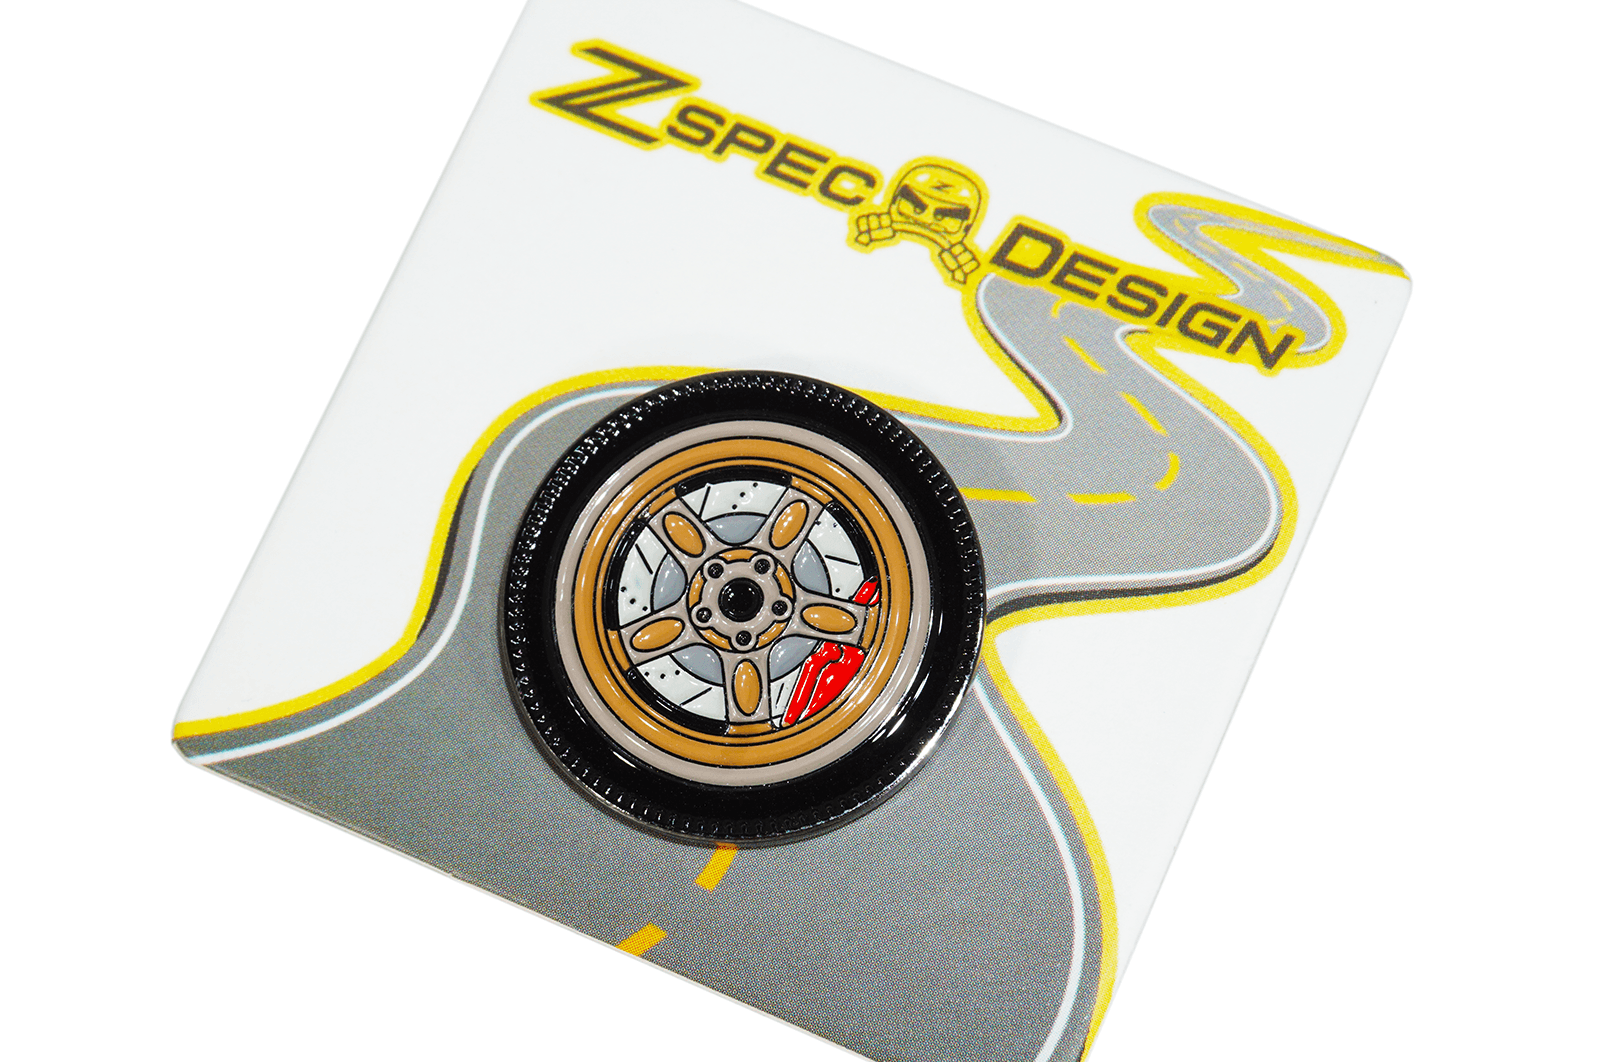 ZSPEC Wheel Pin - Bronze Volk-Style Design - great for Lapels, Hats, Backpacks  Keywords Upgrade Collector Hobby Garage Race Sports Car Rims Wheels Forged Cast Emotion Work Motegi Z1 ZM-23